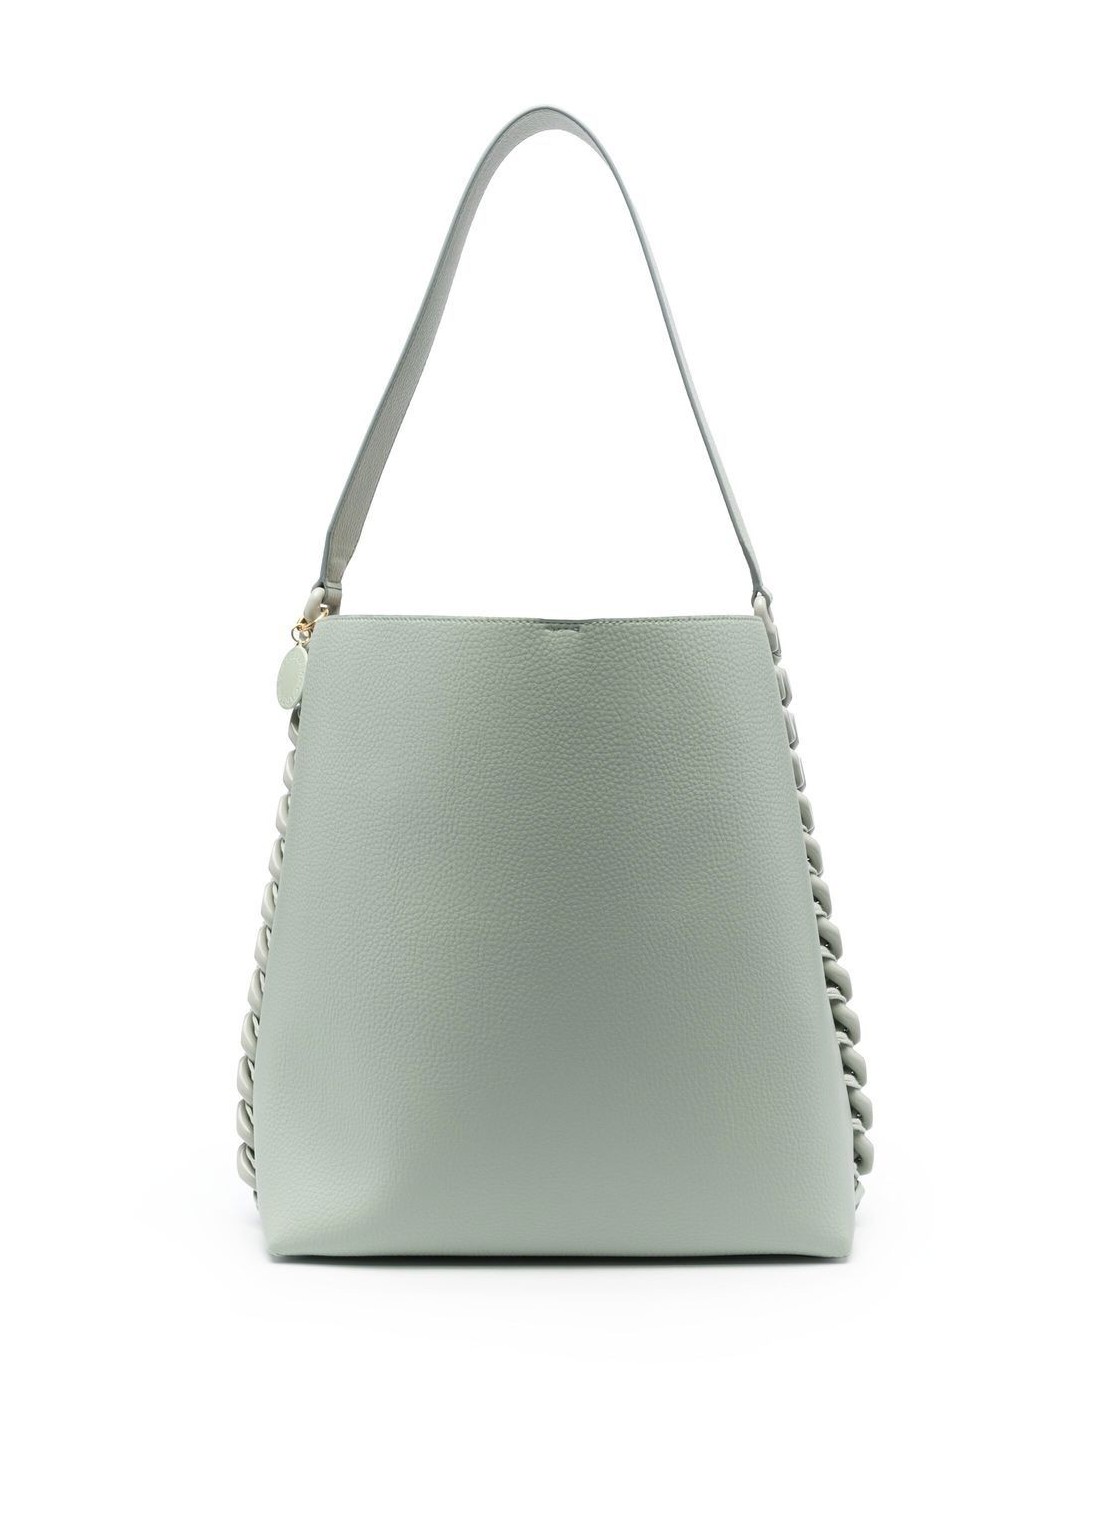 Handbag stella mccartney handbag woman tote bag embossed grainy mat 7b0011wp0065 3900 talla T/U
 